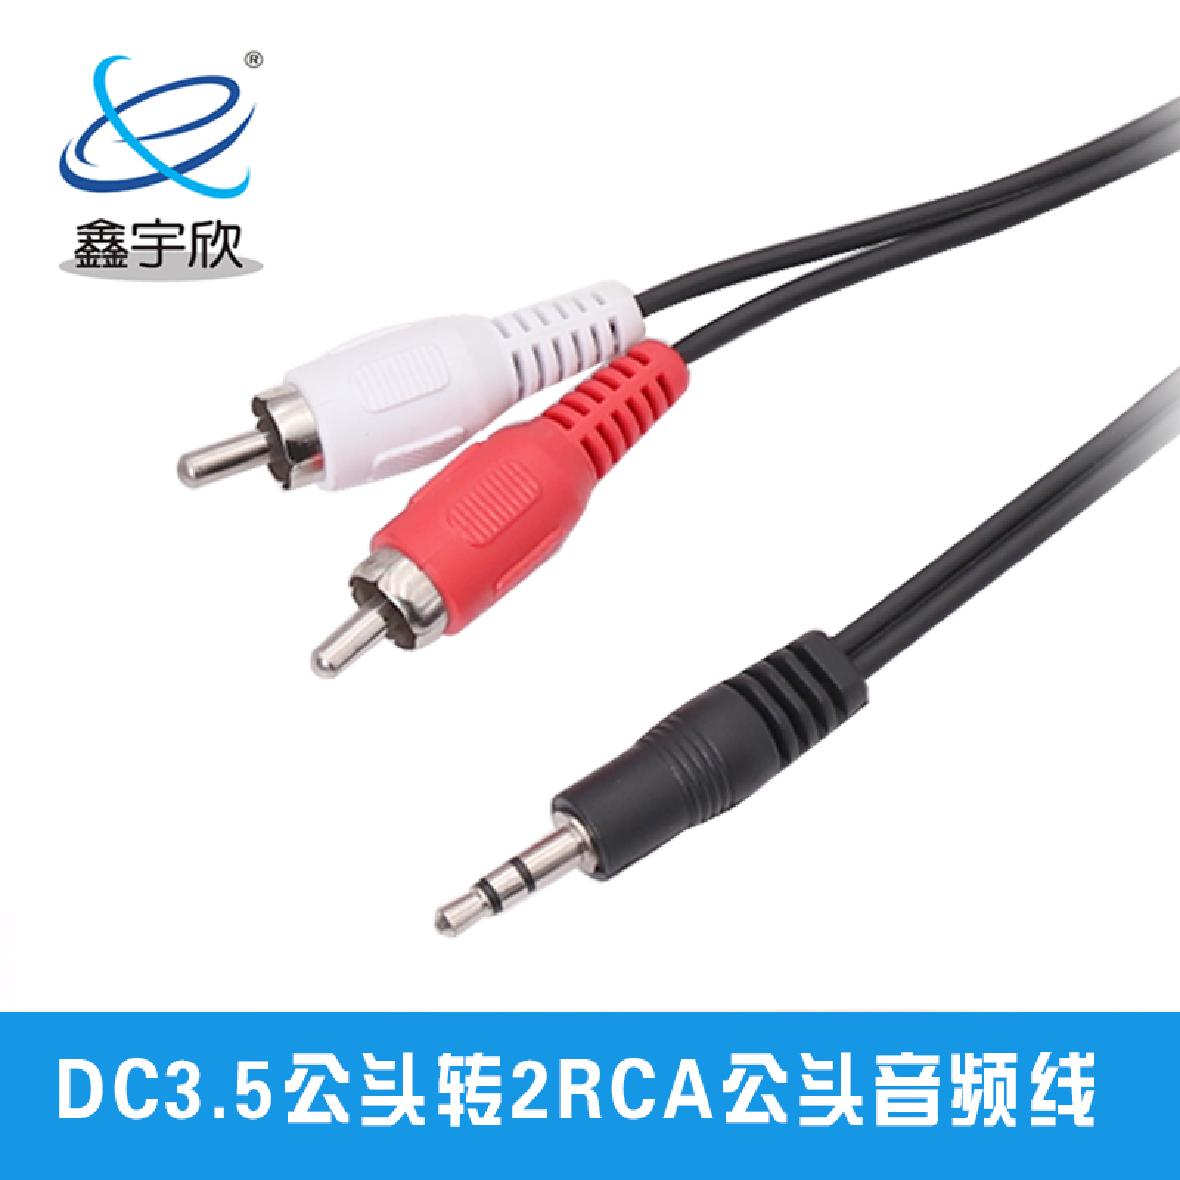  DC3.5公转2RCA音频线 dc3.5三节 红白头 AV音视频转接线